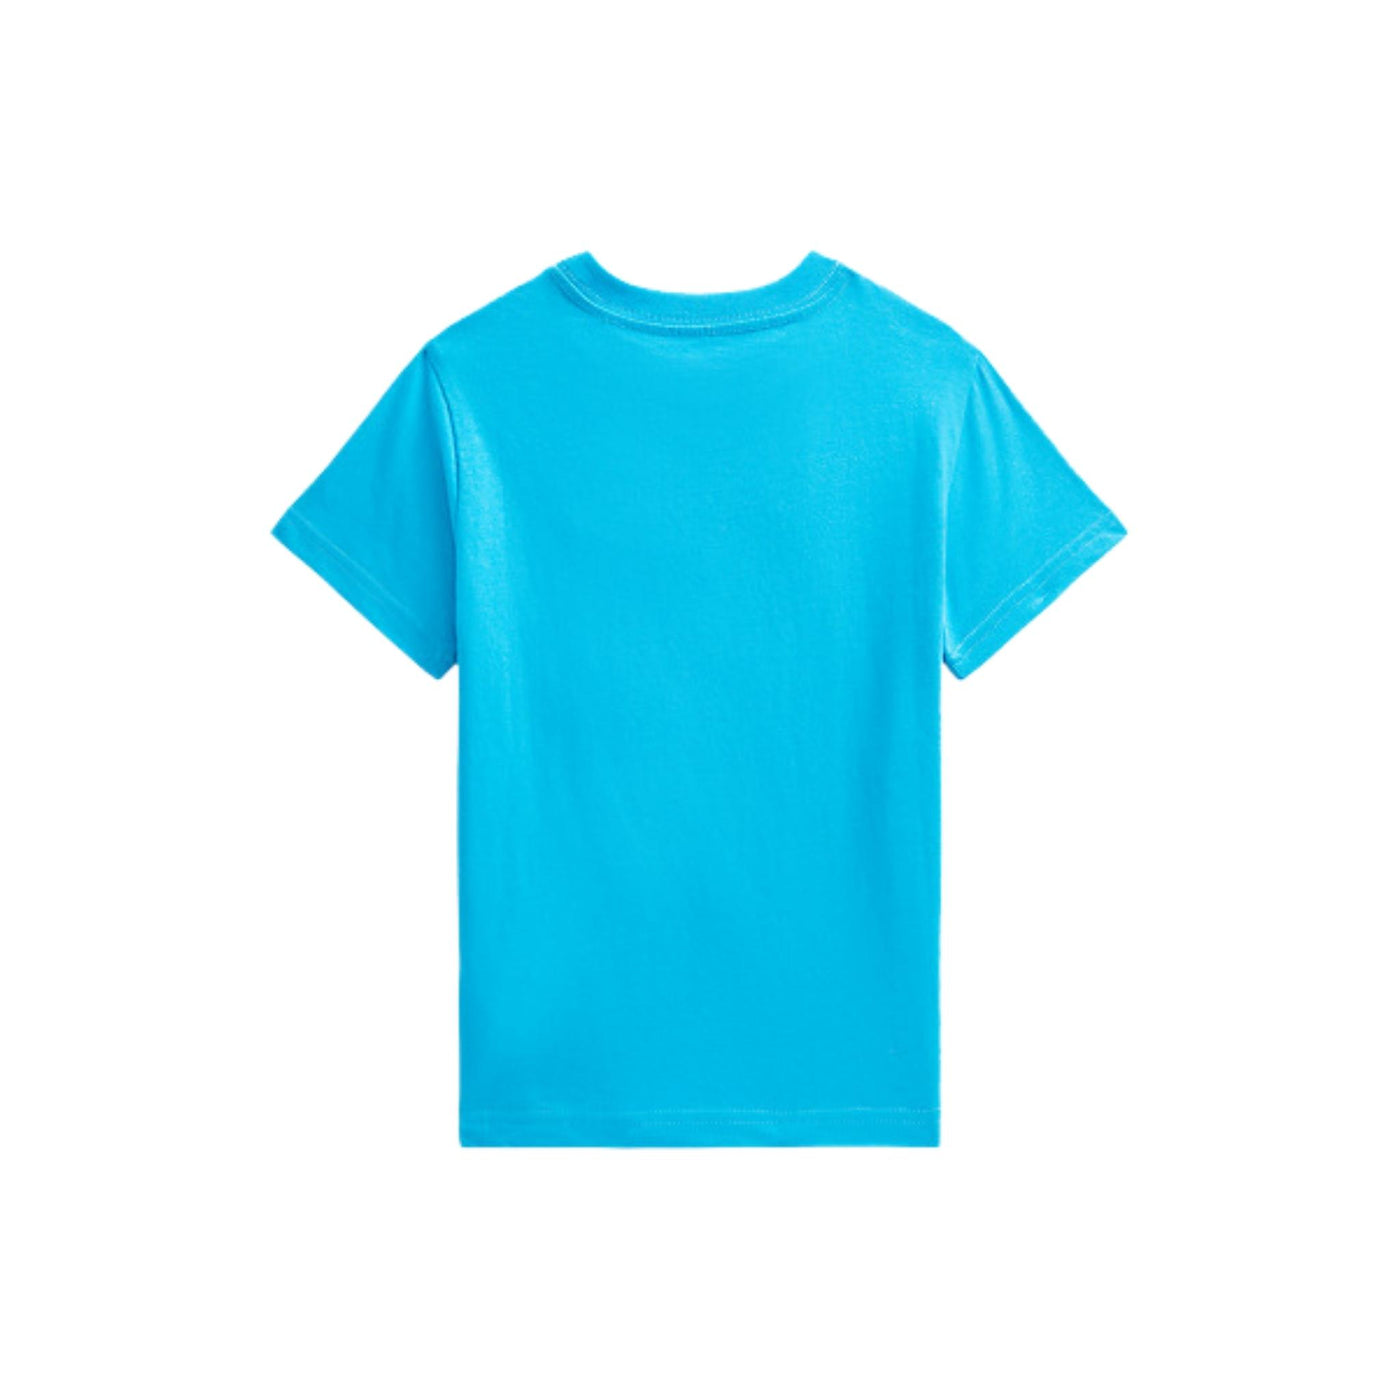 T-shirt Bambino in jersey di cotone con ricamo